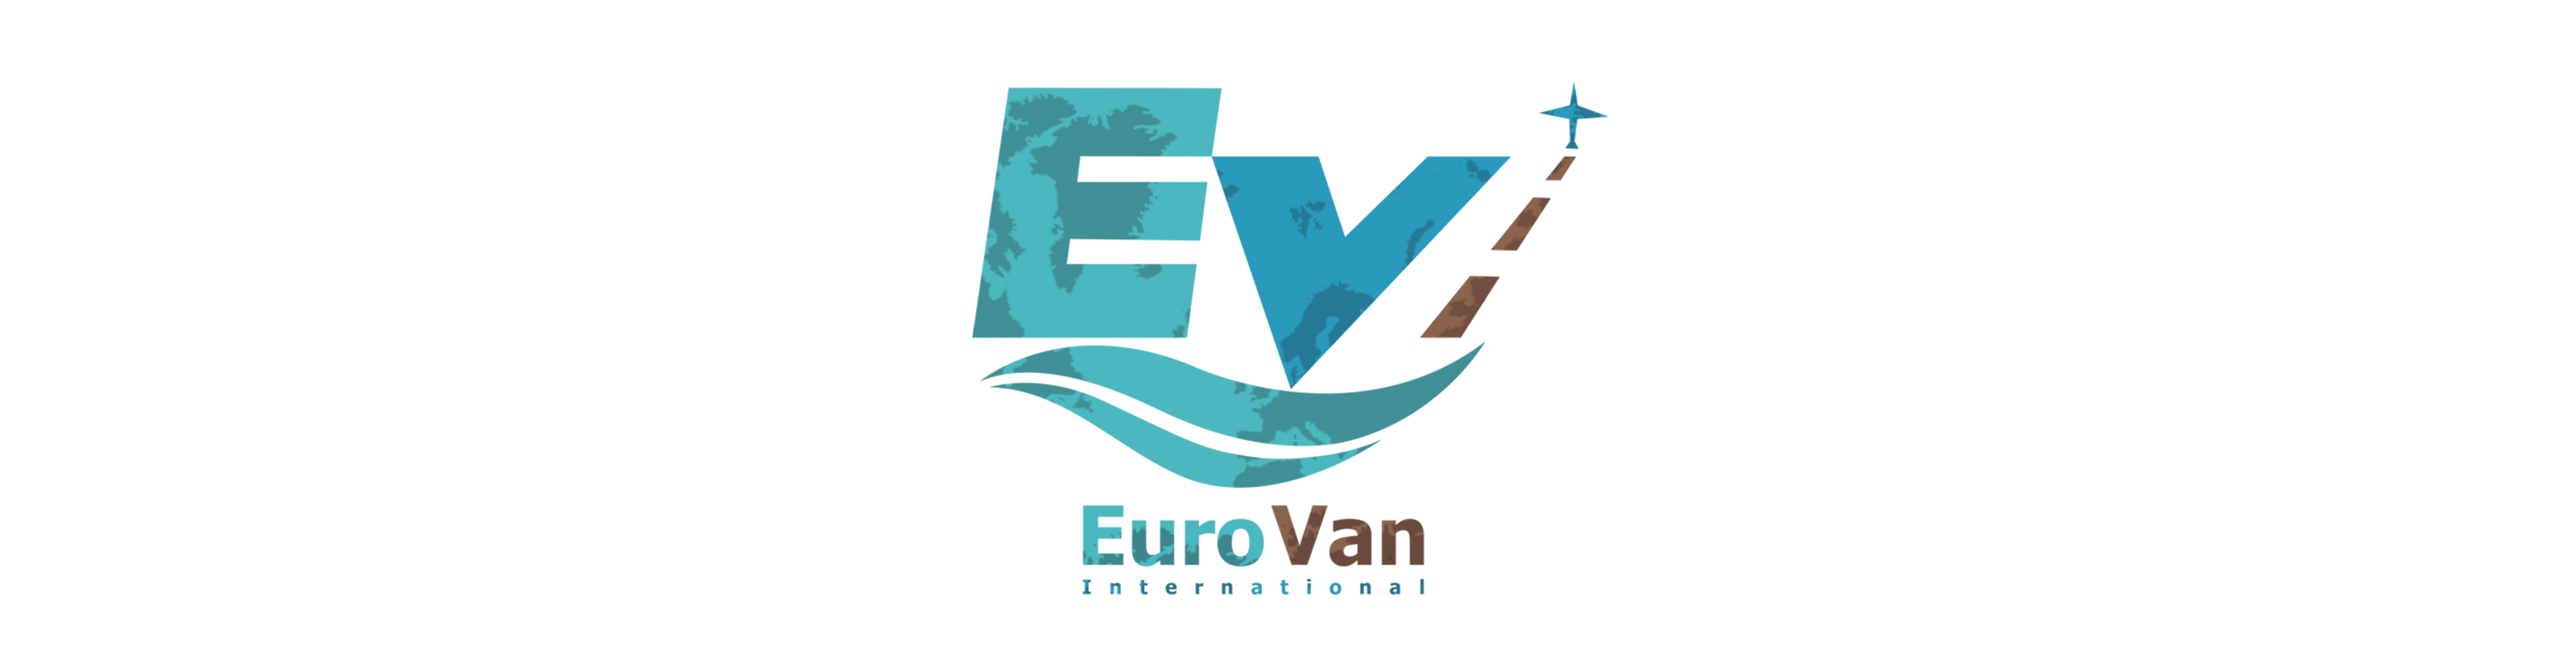 Eurovan International